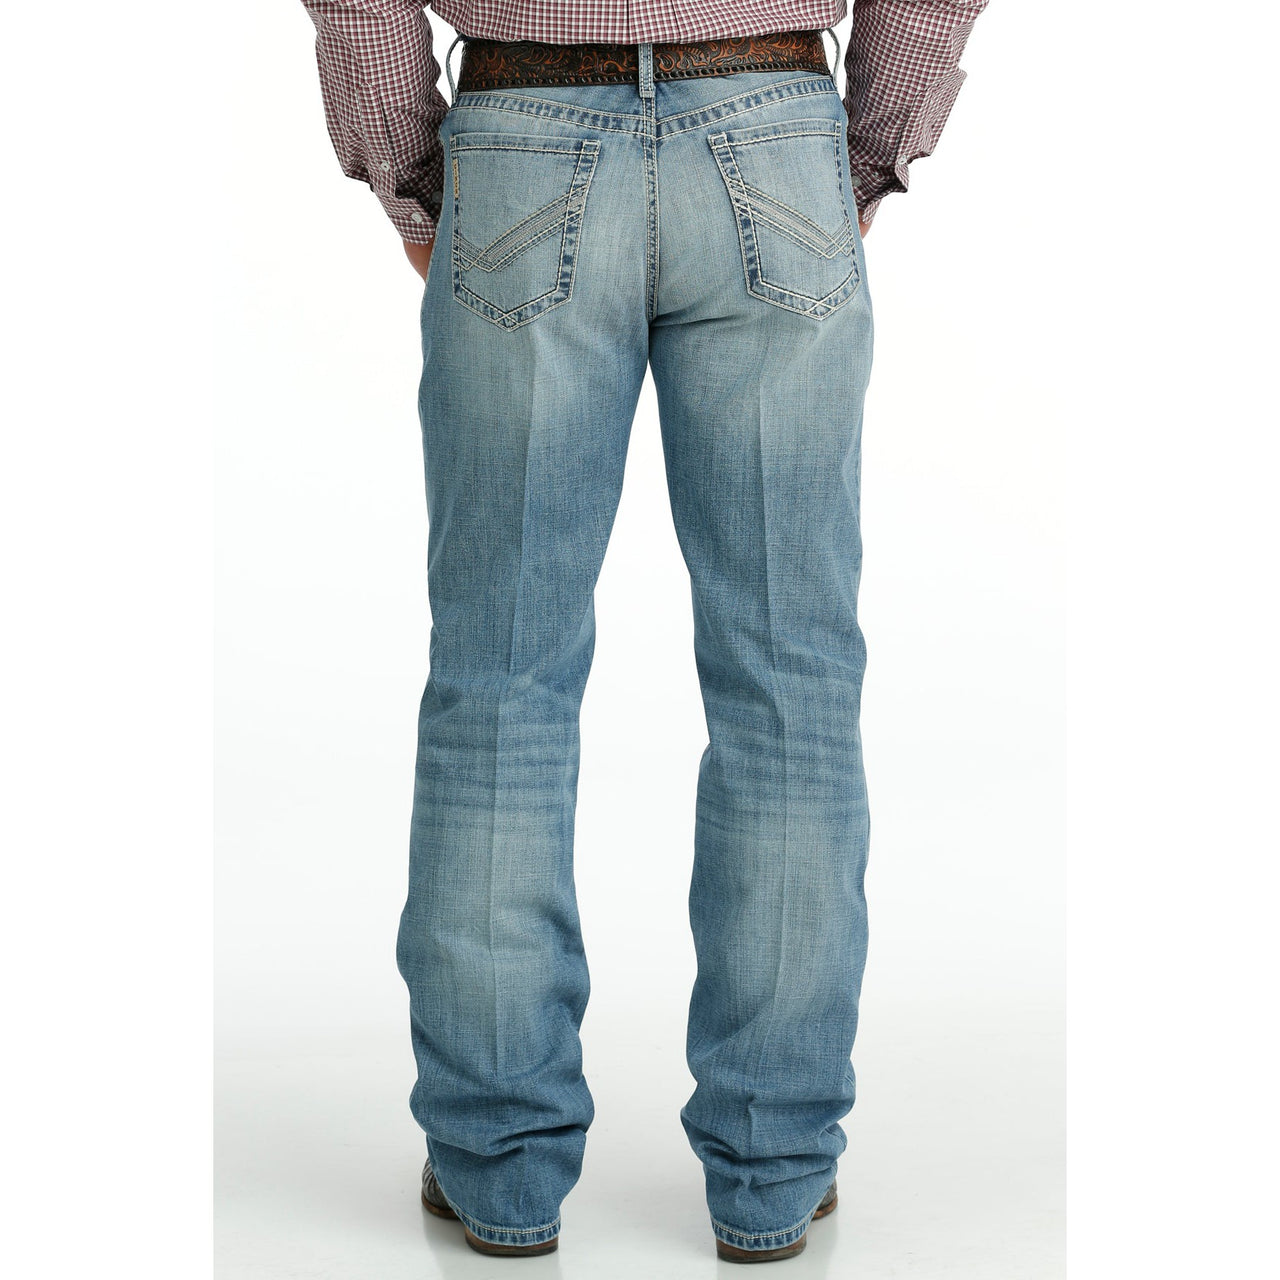 Cinch Men's Grant Light Stone Jeans